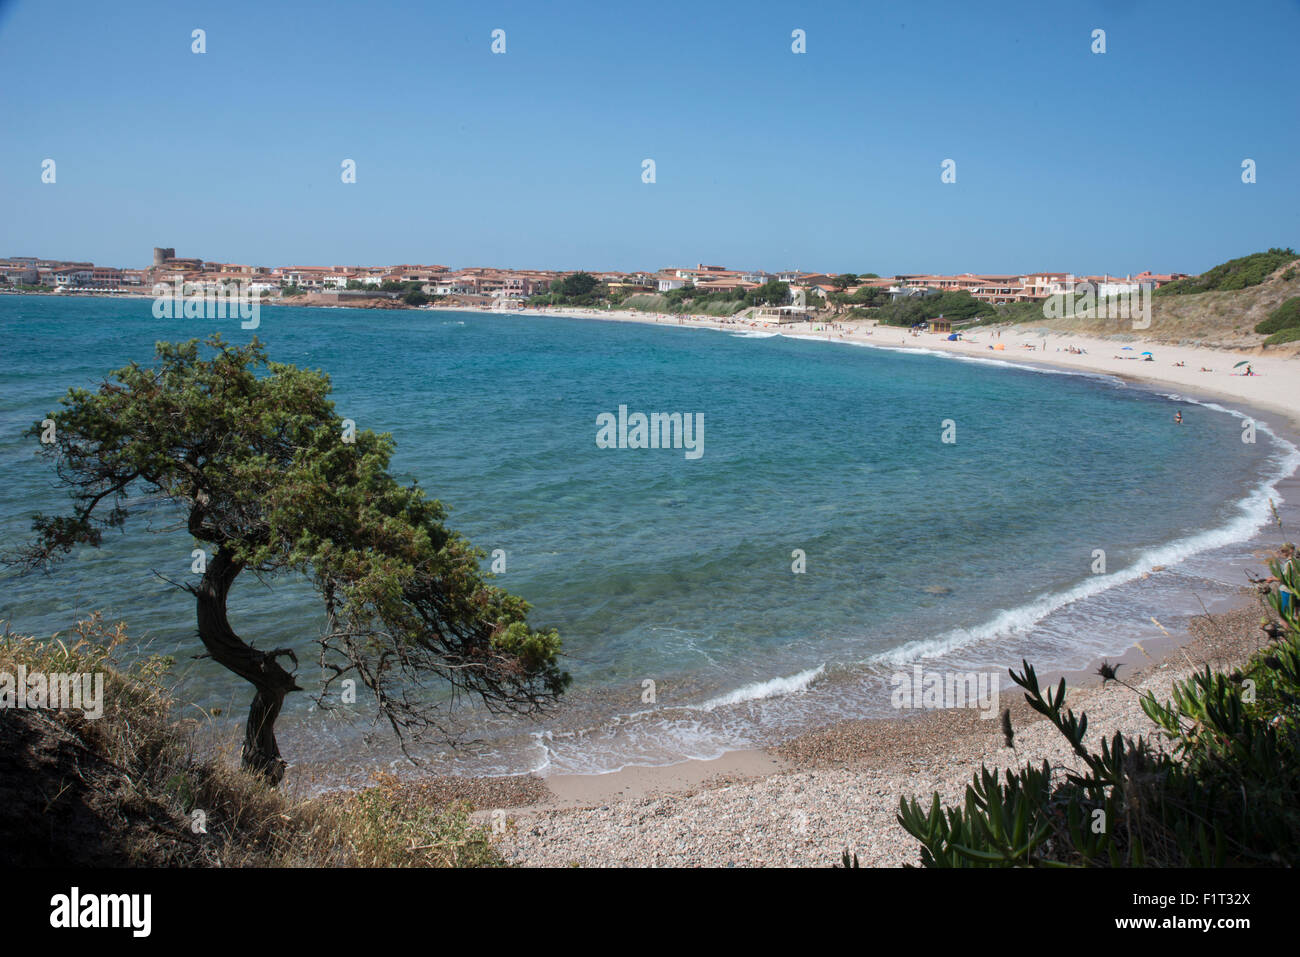 The fishing village, resort and beach of Isola Rossa, Sardinia, Italy, Mediterranean, Europe Stock Photo